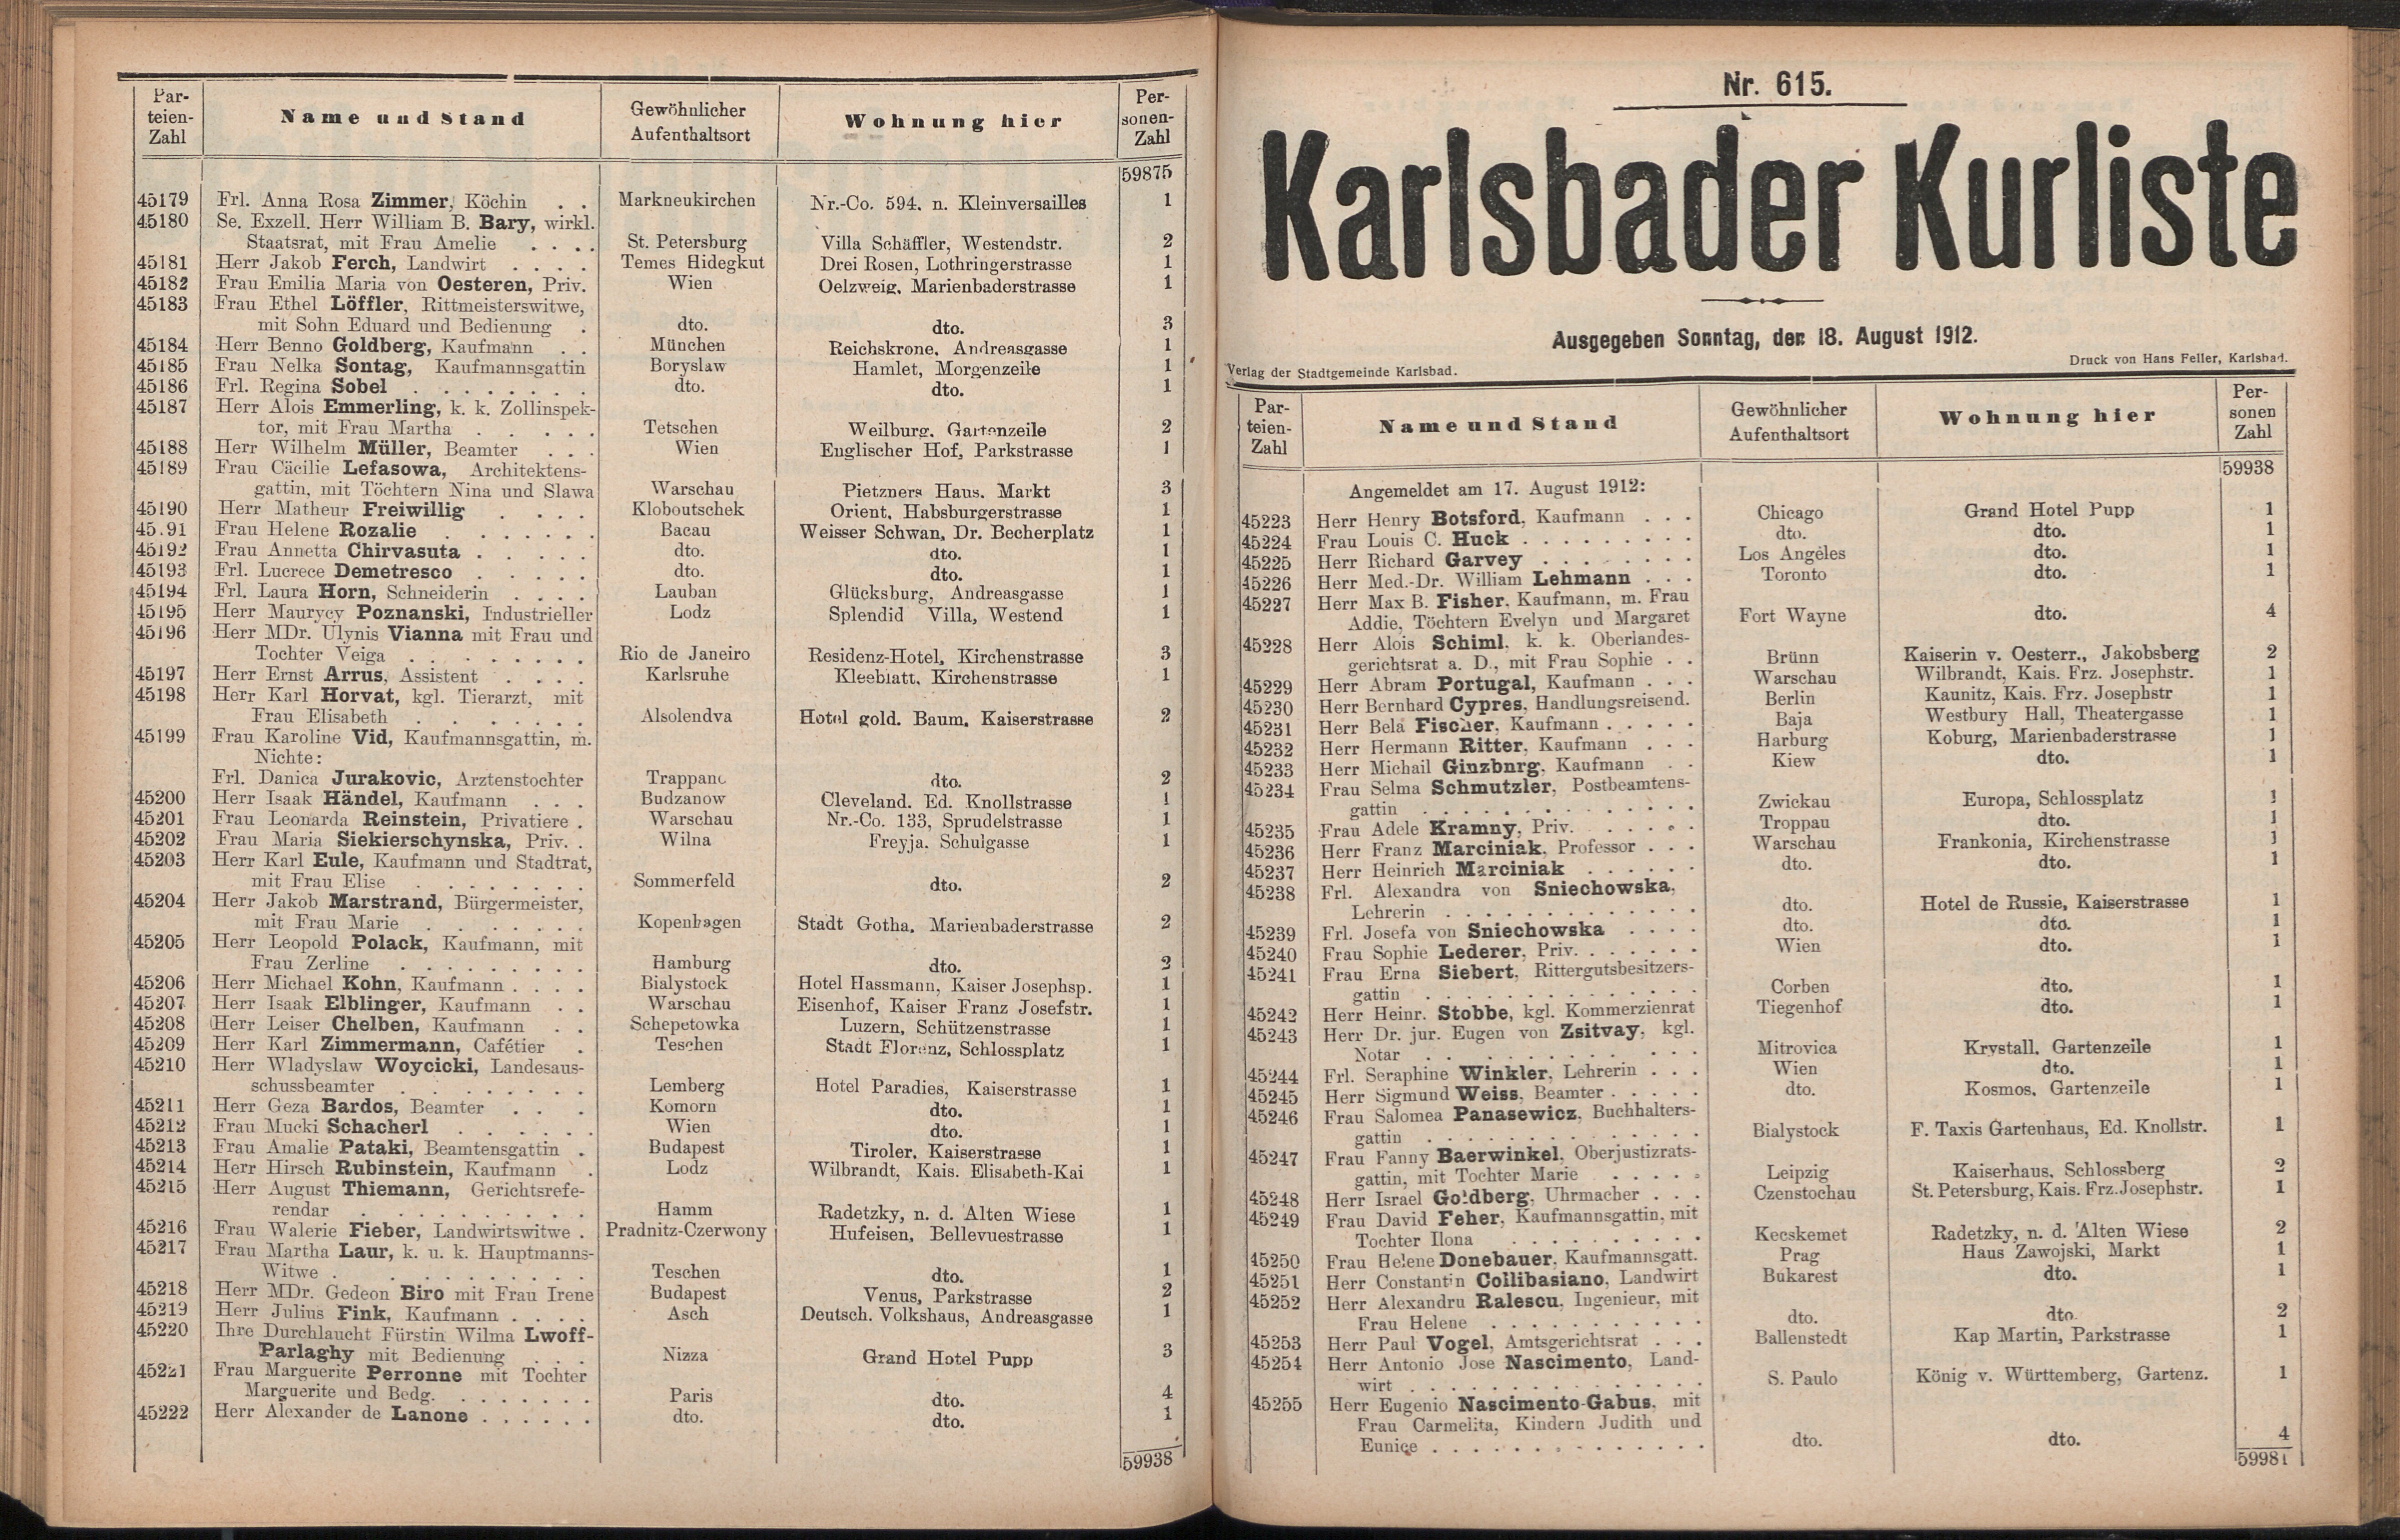 333. soap-kv_knihovna_karlsbader-kurliste-1912-2_3330